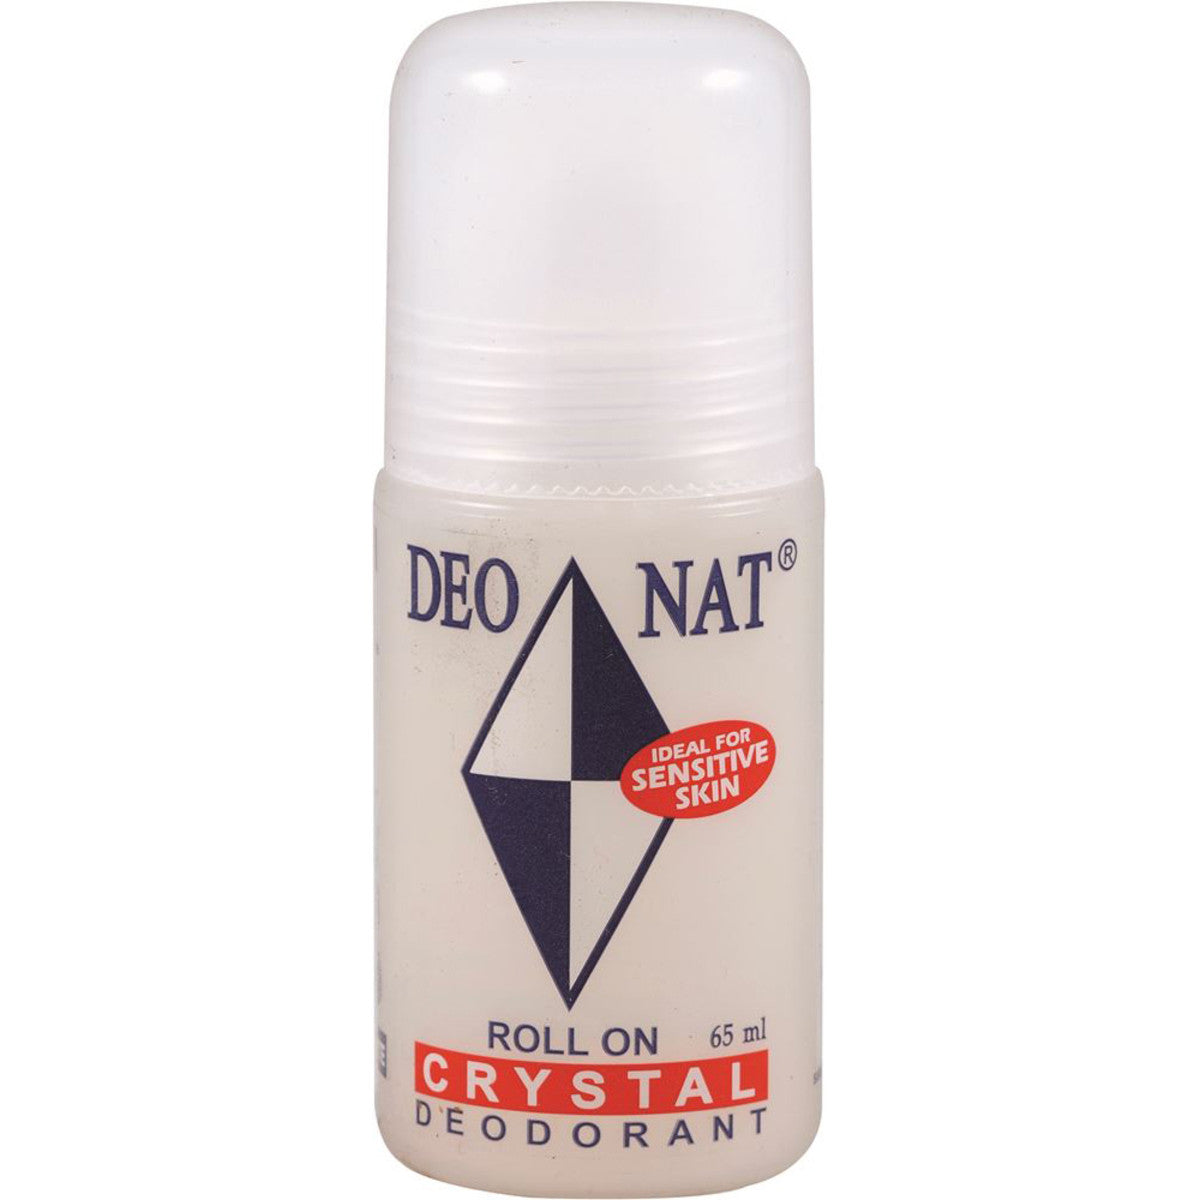 Deonat - Crystal Deodorant Roll On